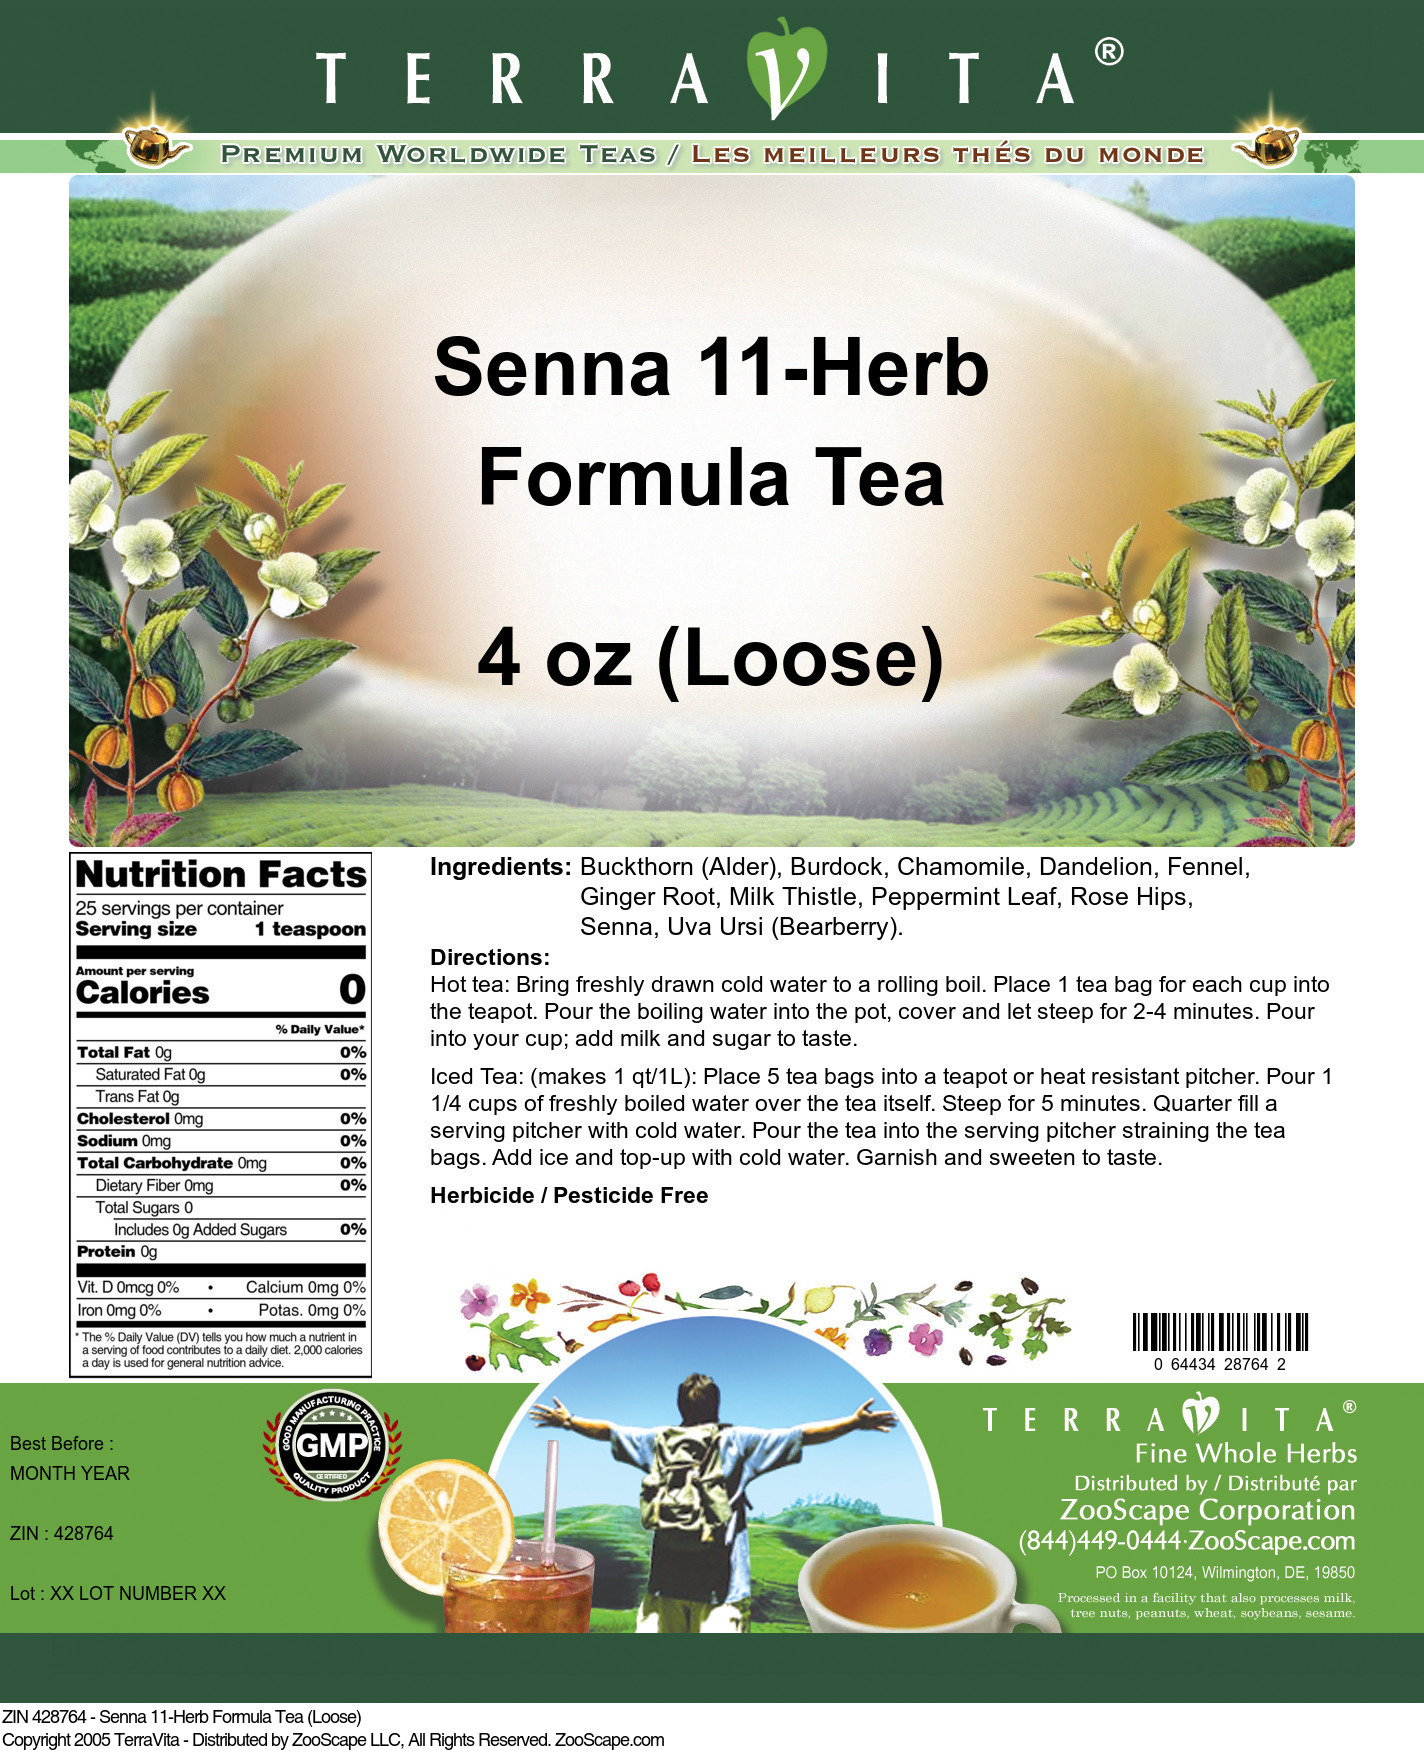 Senna 11-Herb Formula Tea (Loose) - Label